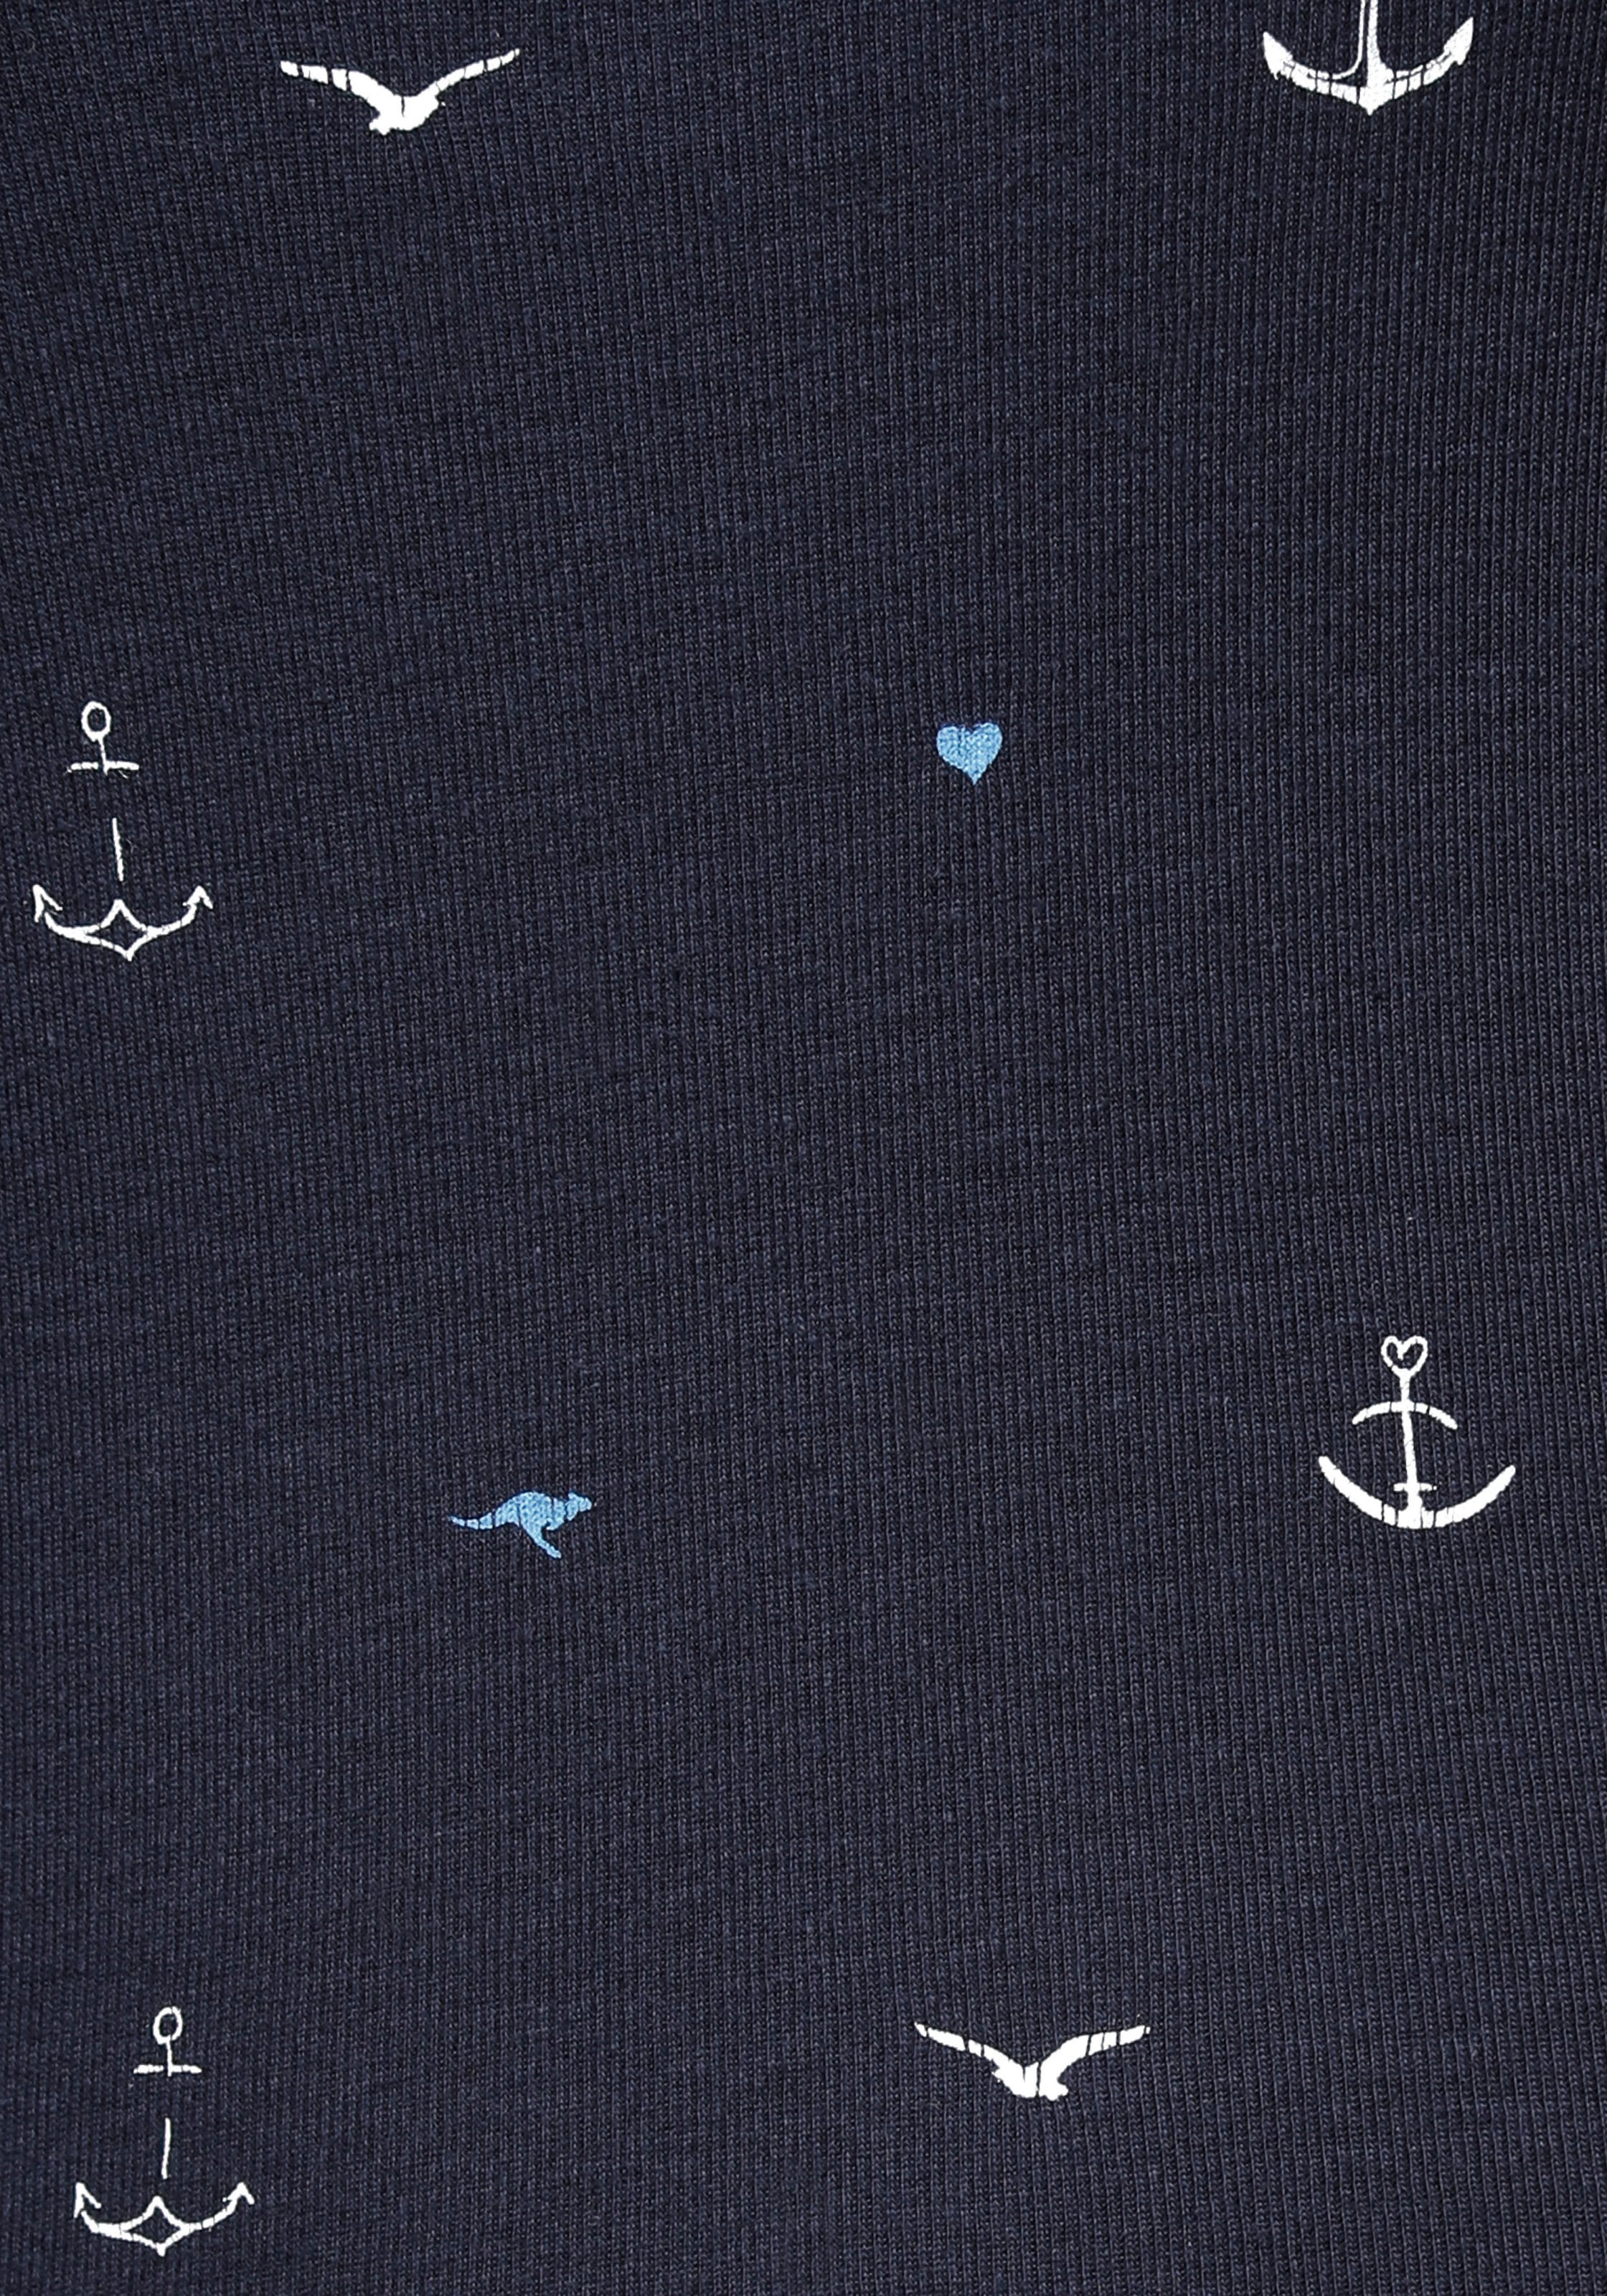 KangaROOS Poloshirt, mit maritimem Allover-Print ♕ bei